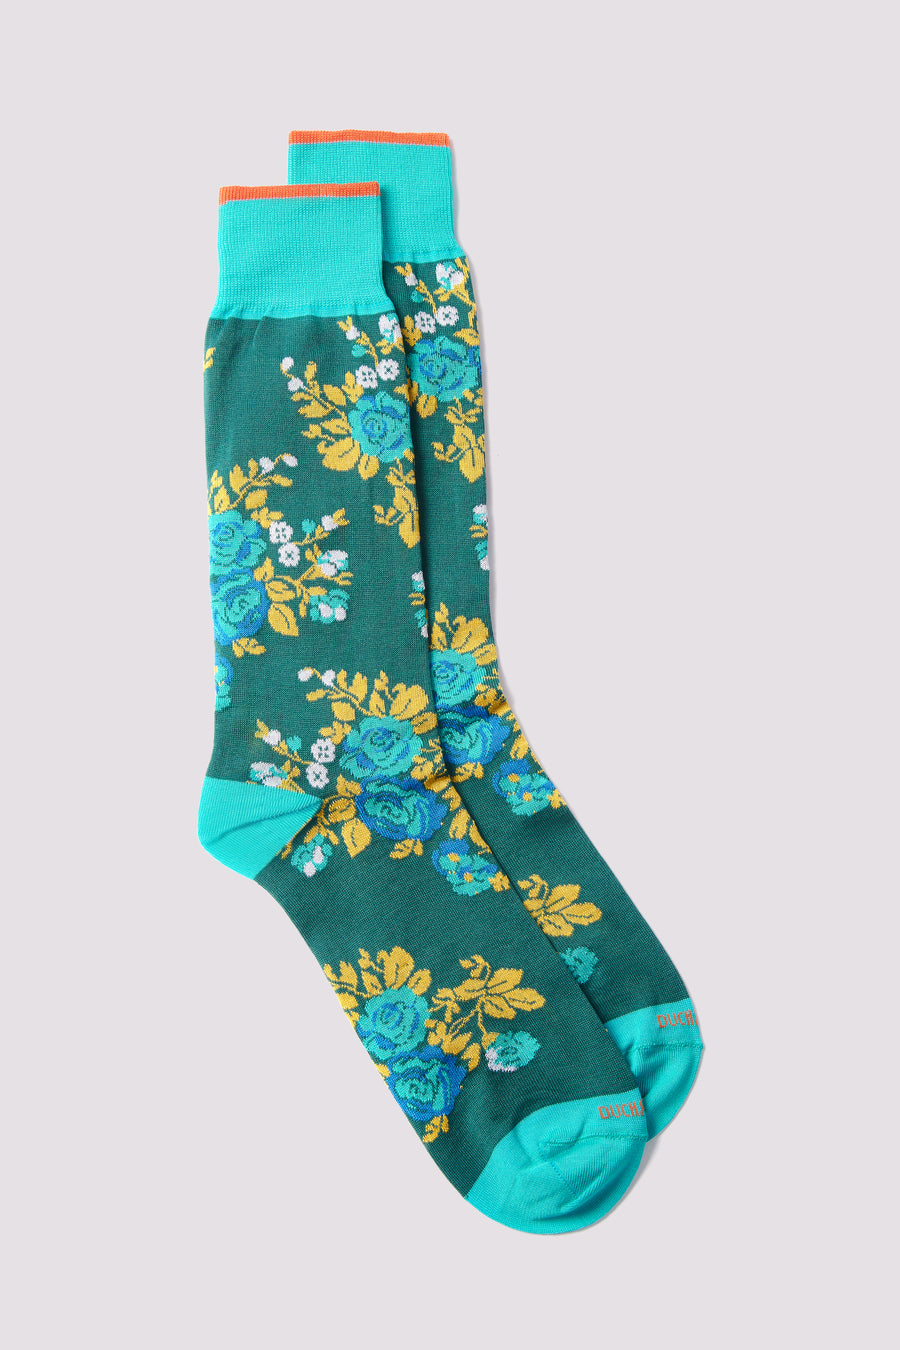 Rose Socks in Turquoise